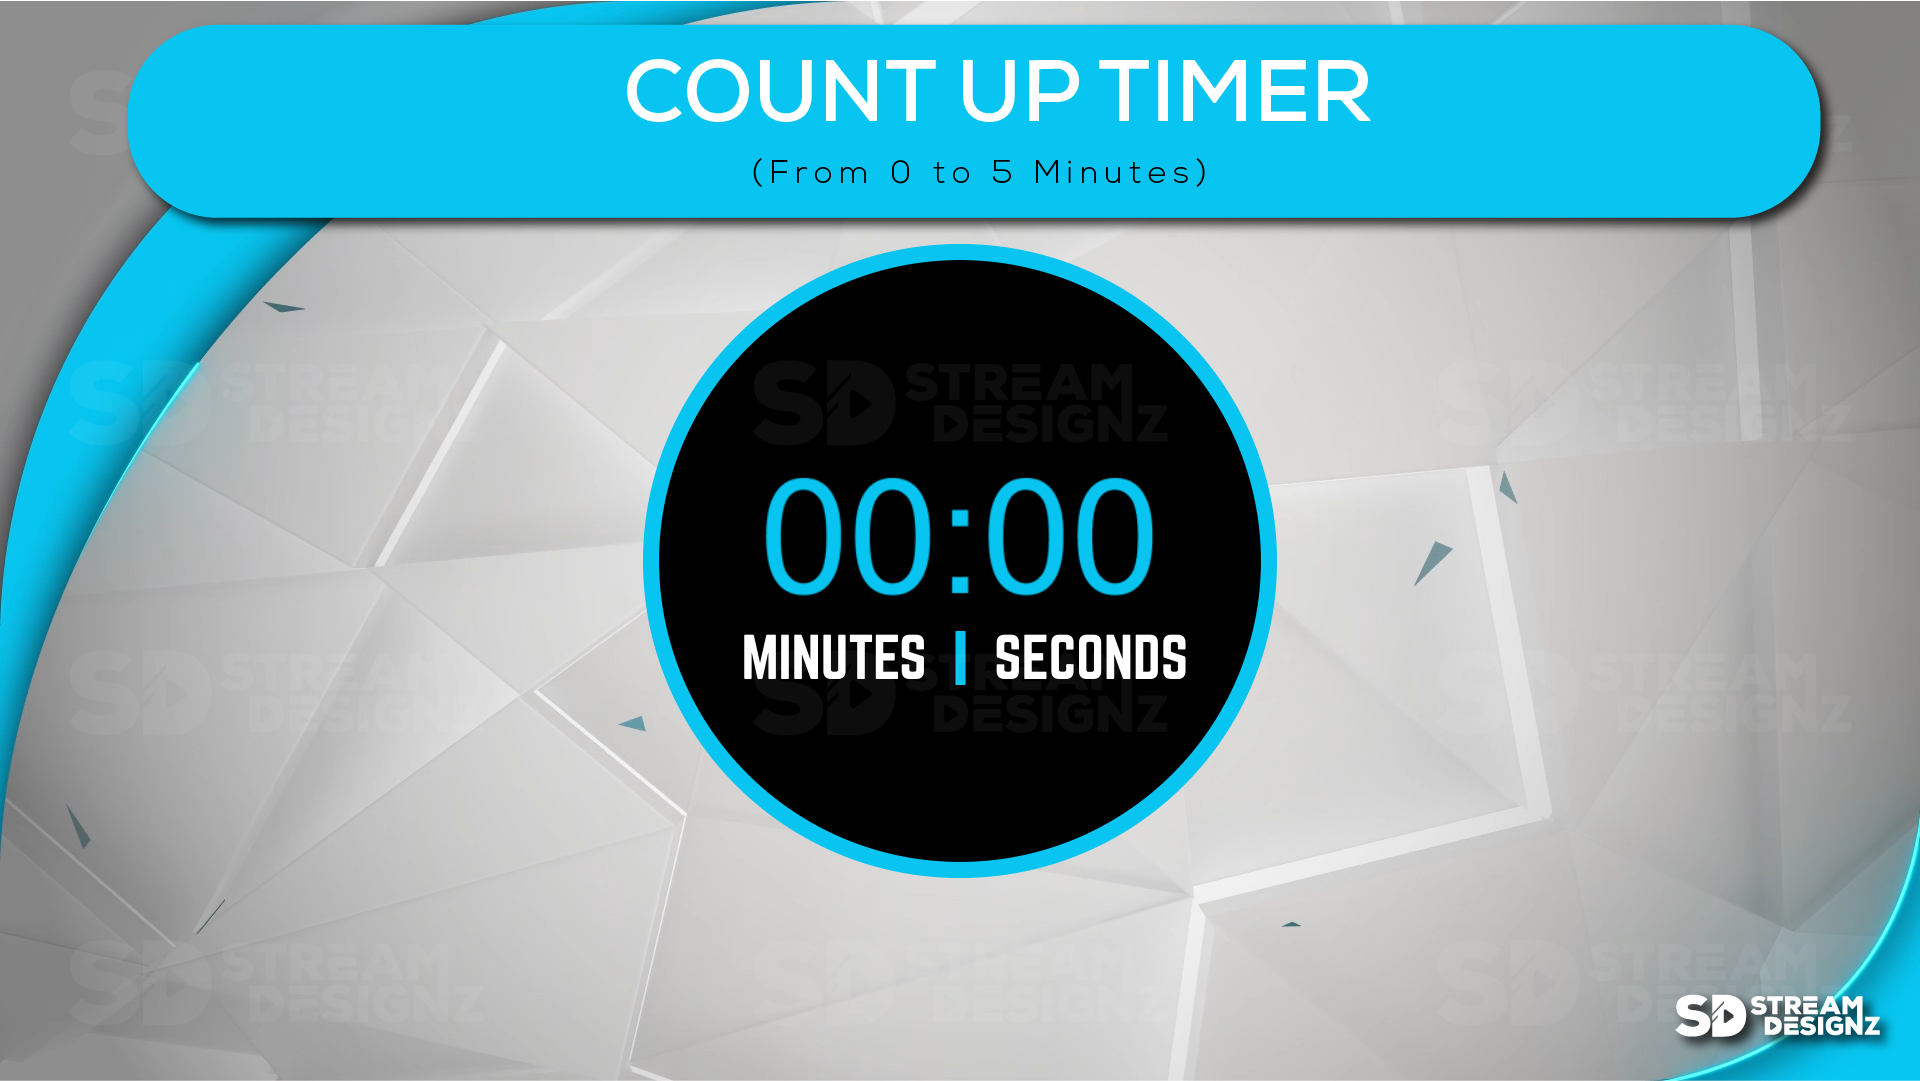 ultimate stream bundle arctic count up timer stream designz